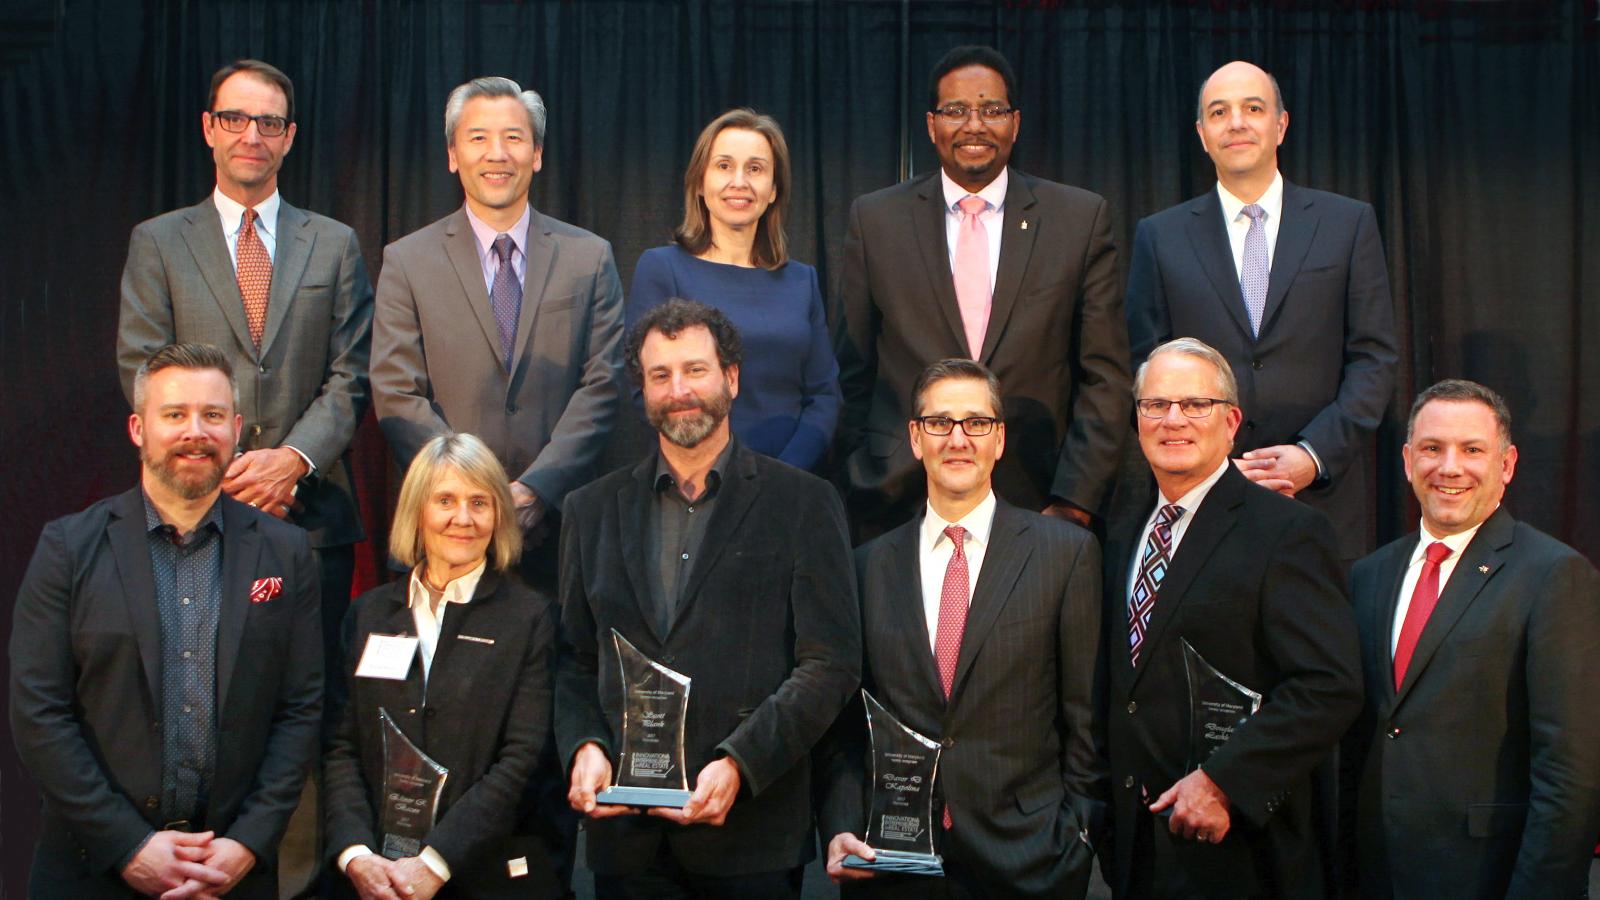 Colvin Institute Honors Maryland’s “Fearless” Entrepreneurs